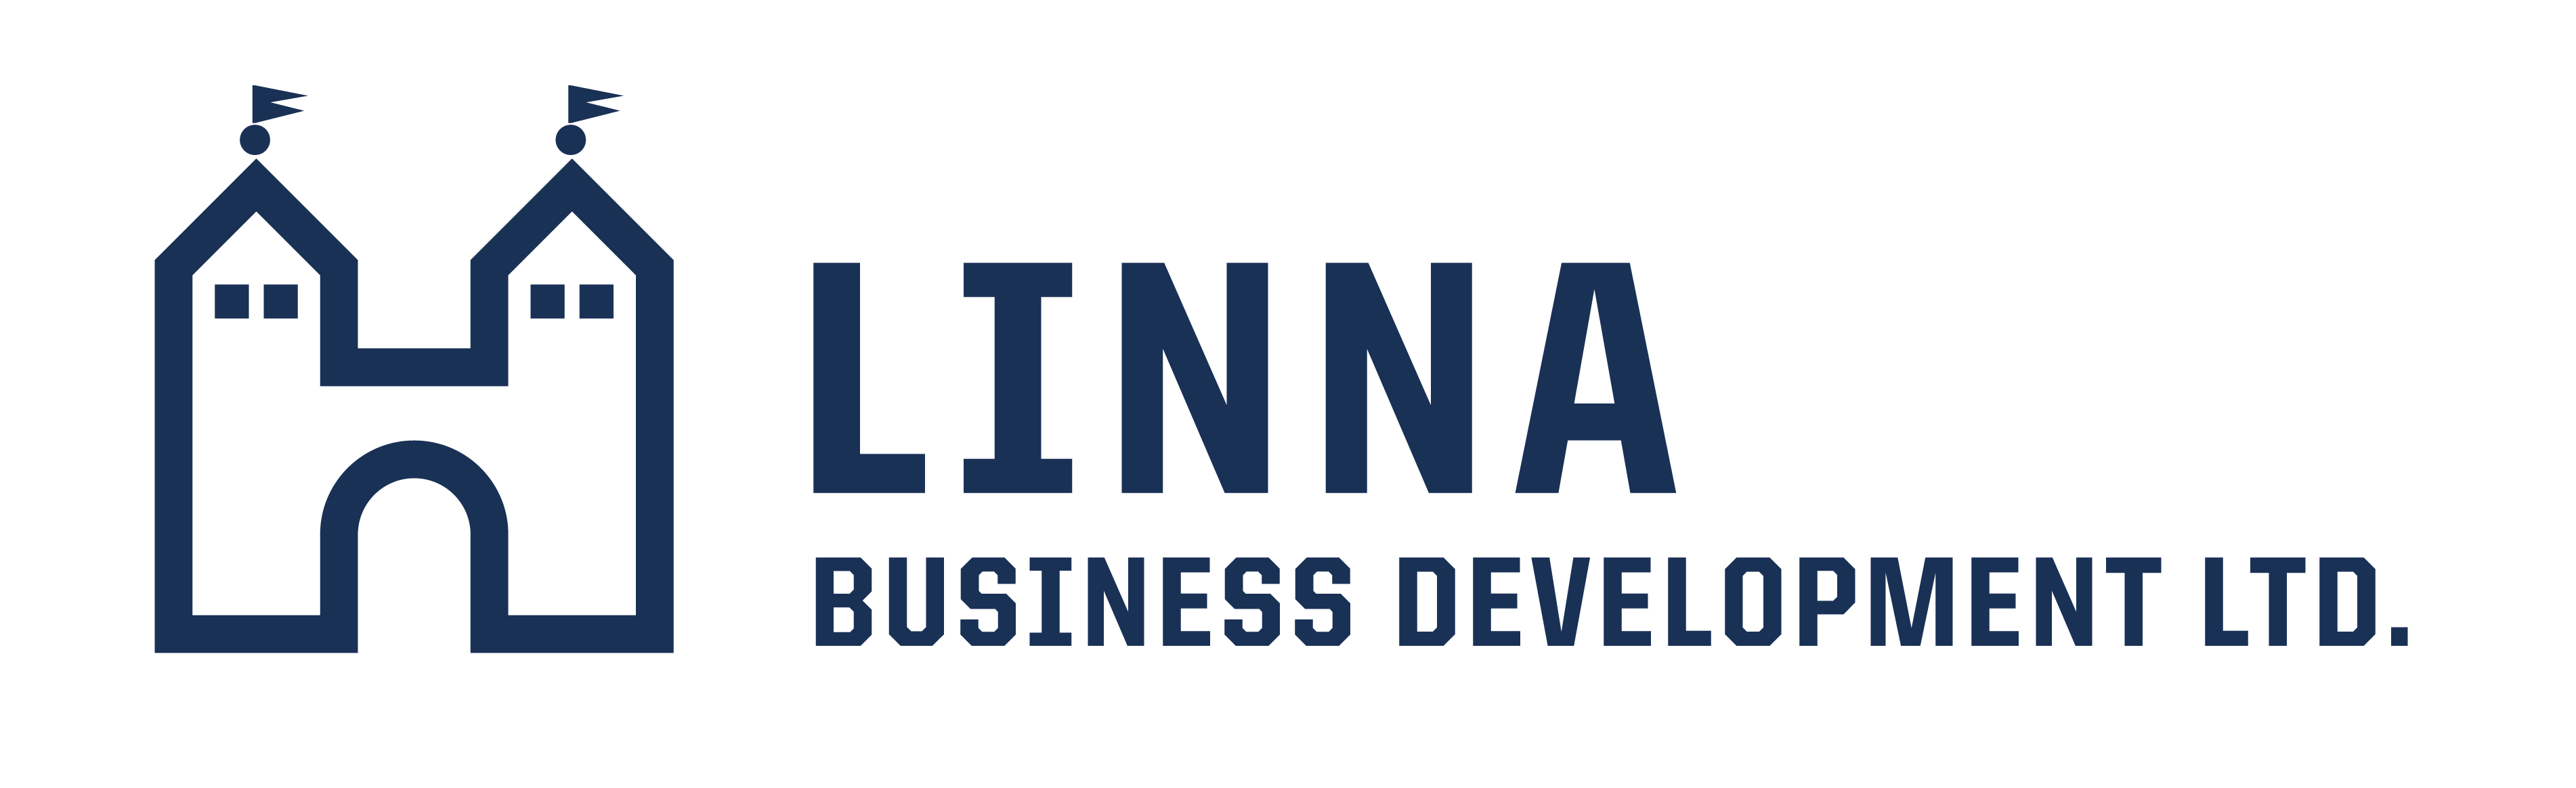 Linnan kehitys -logo, Linna Business development logo